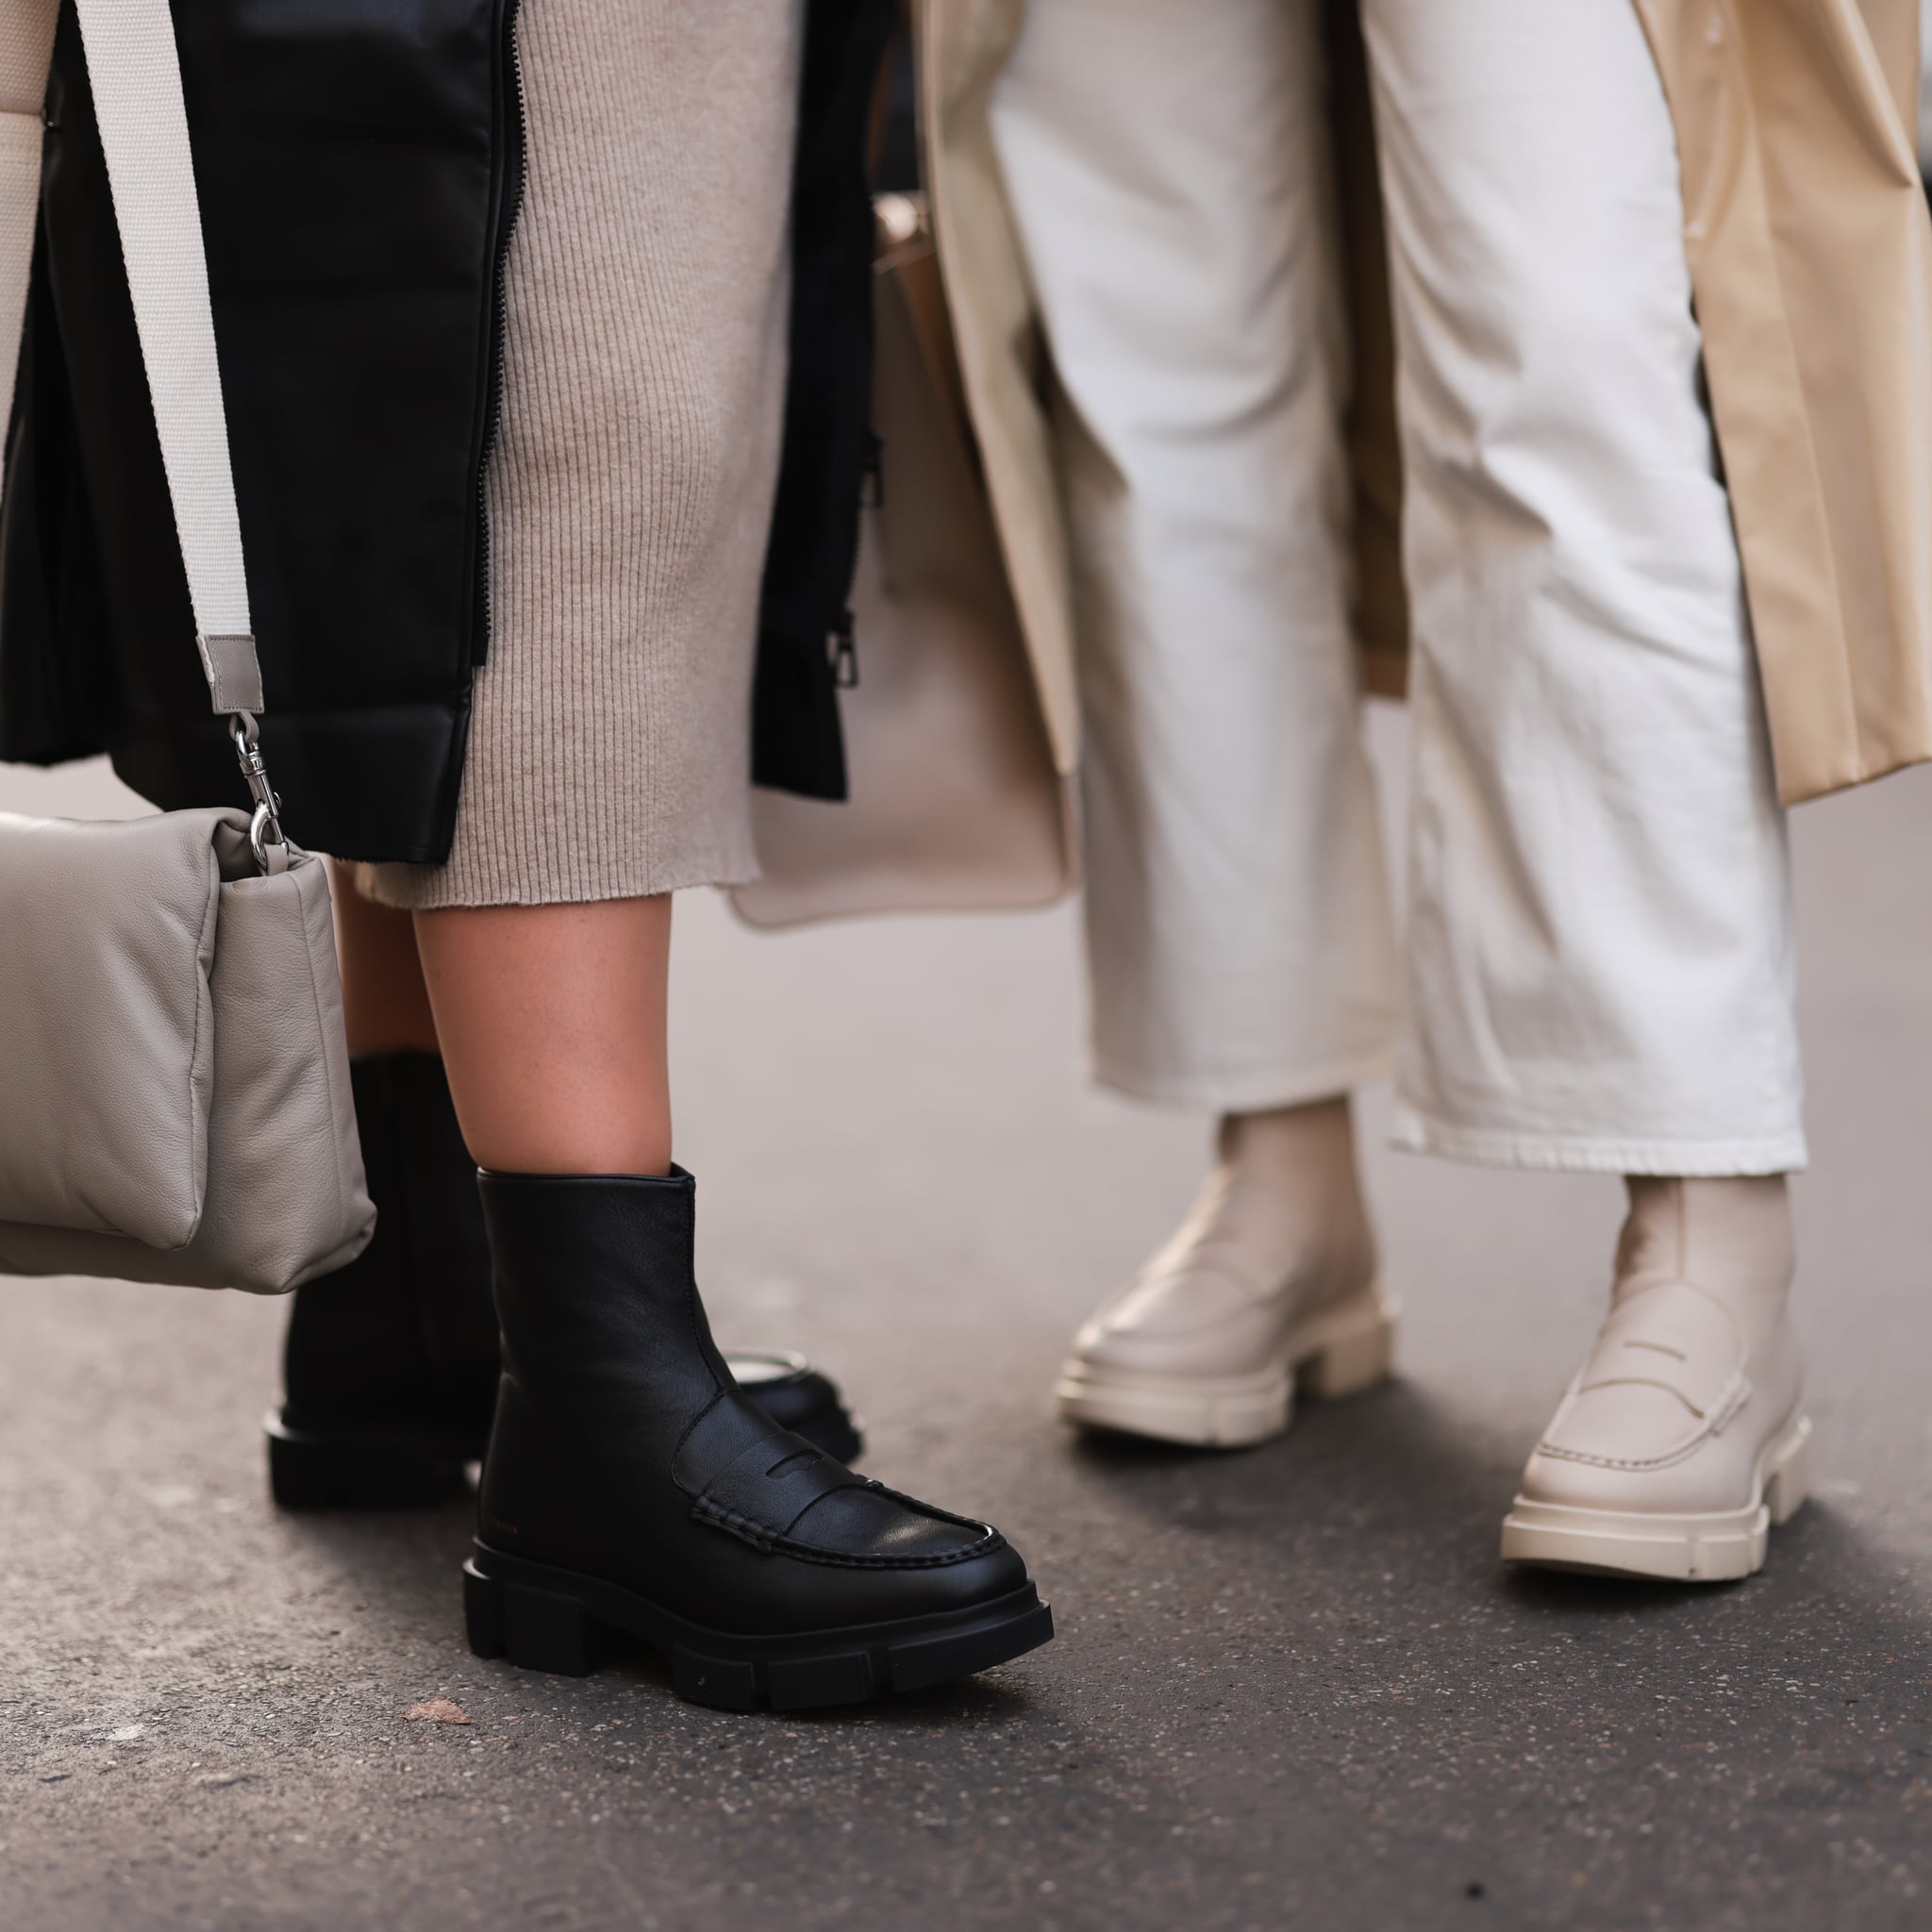 How To Wear The Lug Sole Boots Fashion Trend This Season Popsugar Fashion Vlr Eng Br